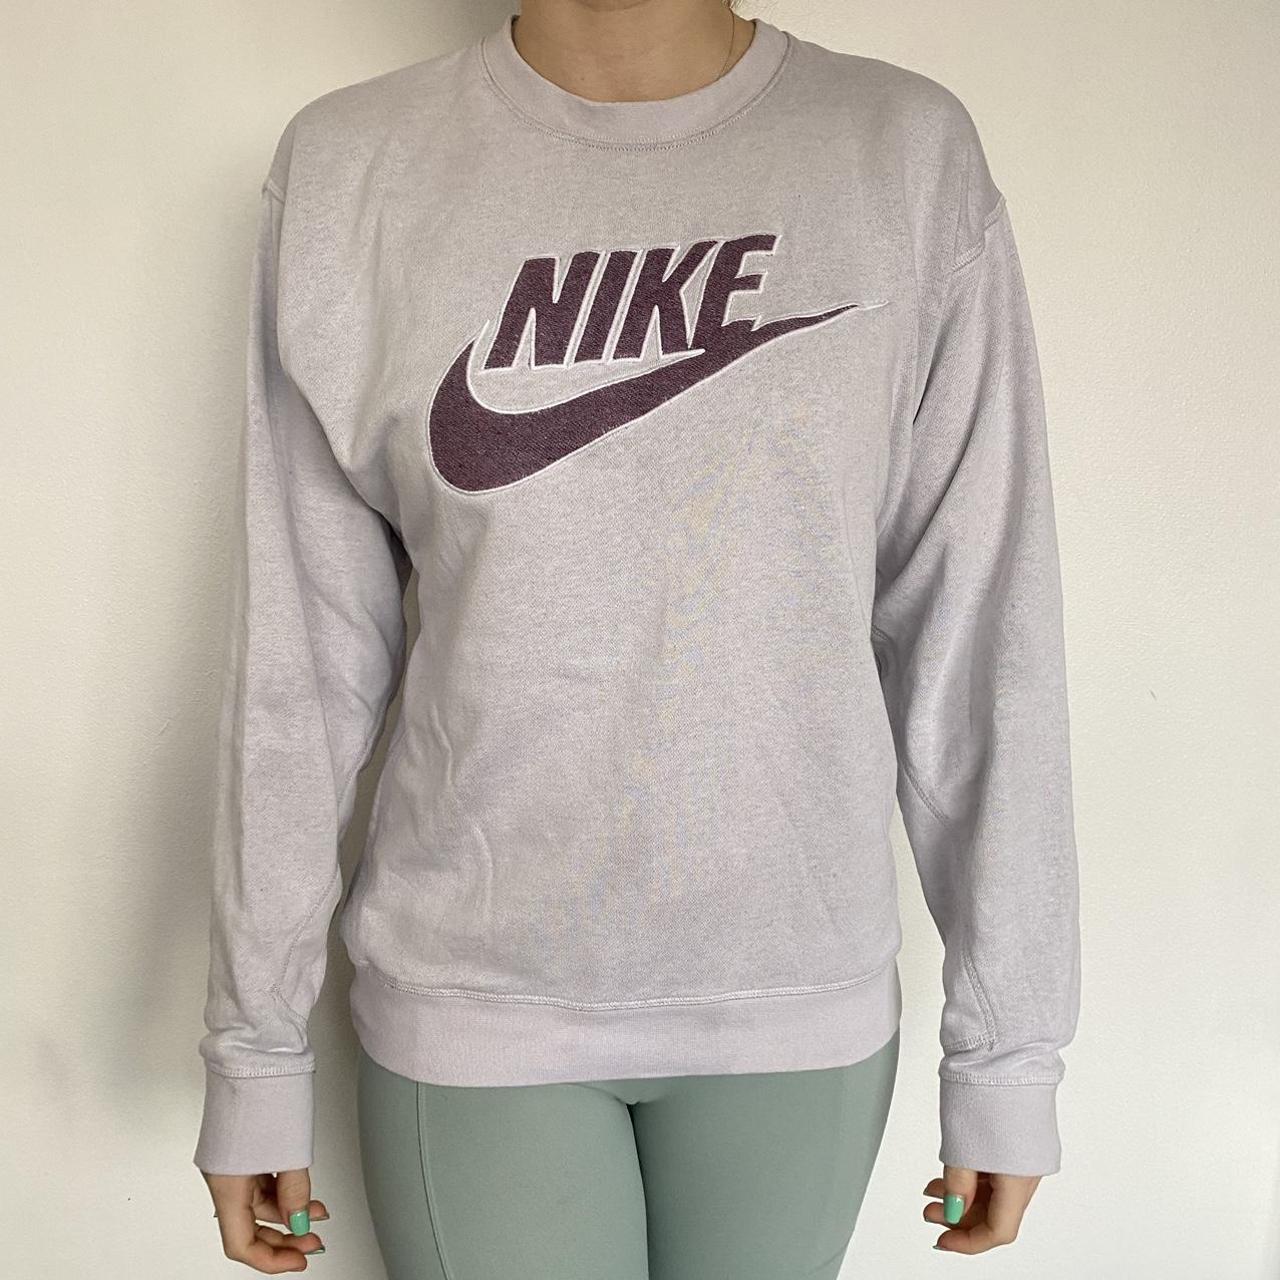 Nike Women's Grey and Pink Jumper | Depop